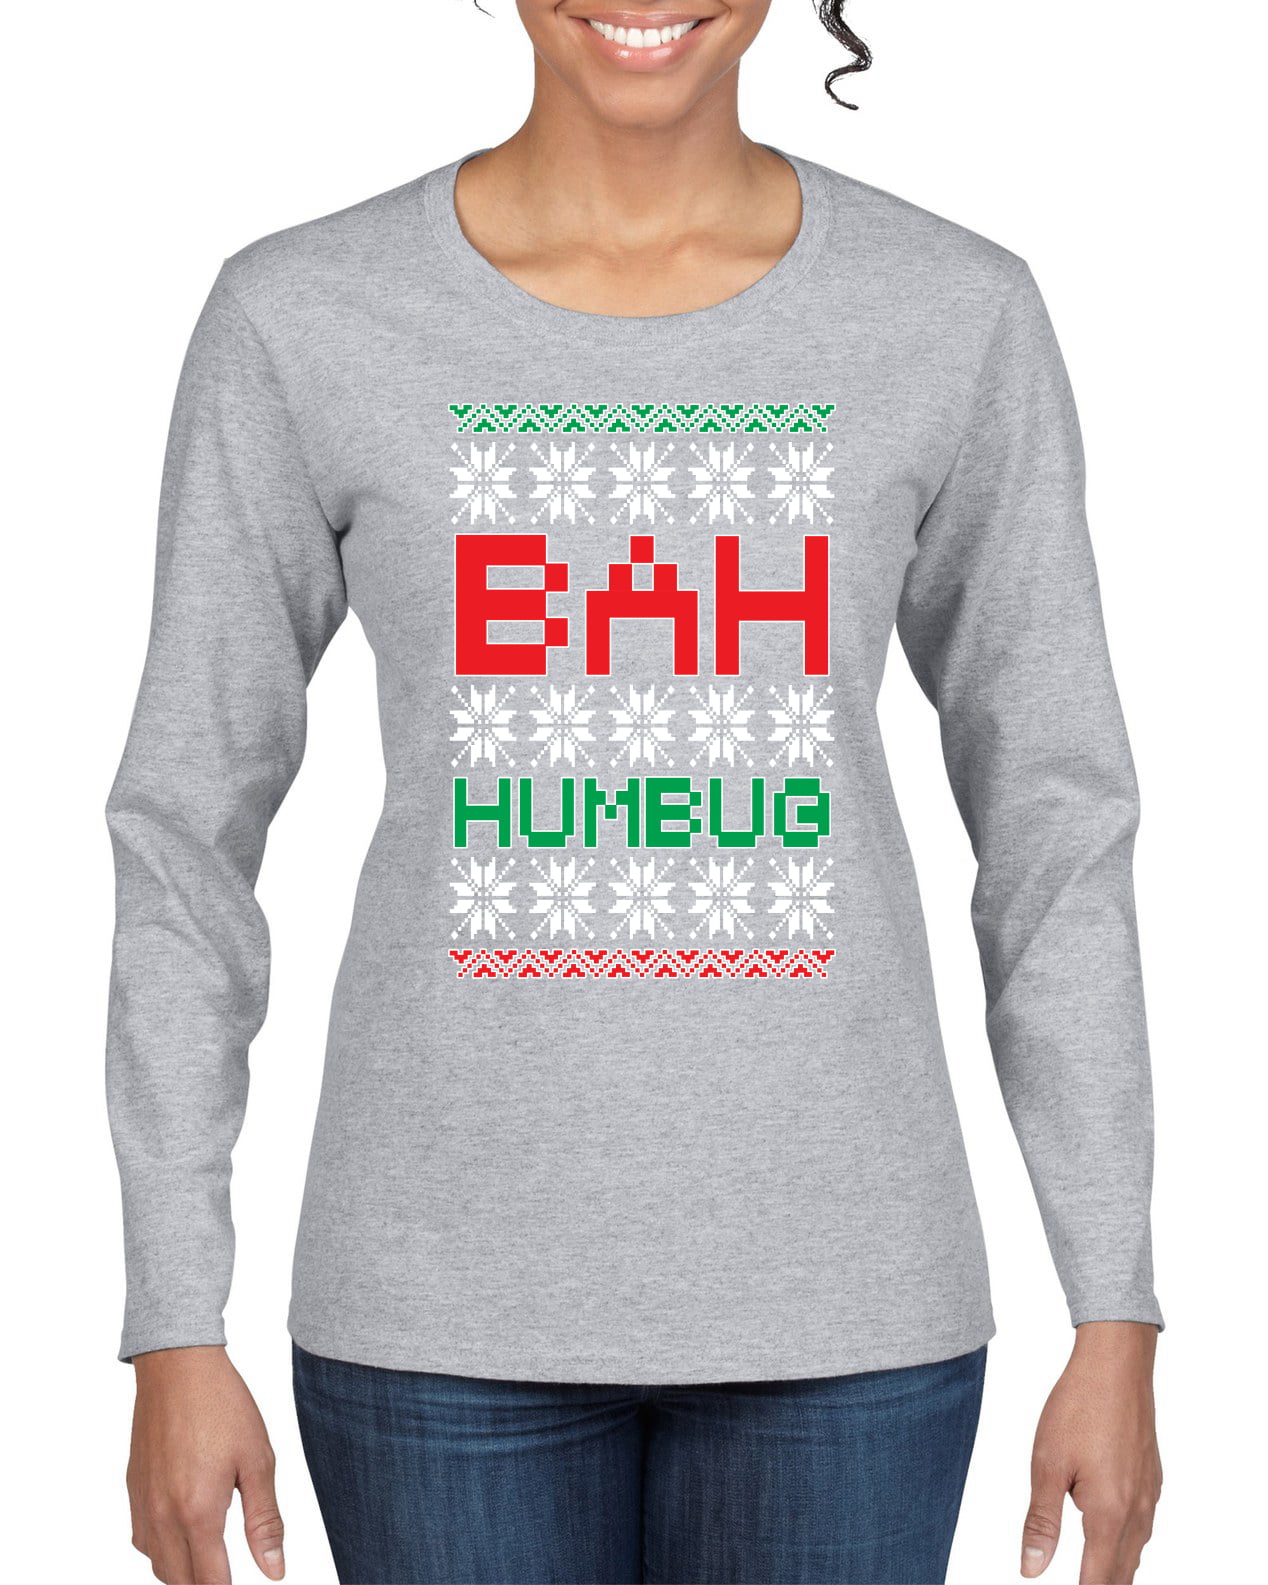 Grinch Christmas Hoodie Movie Humbug Birthday Xmas Jumper Sweatshirt Gift Top